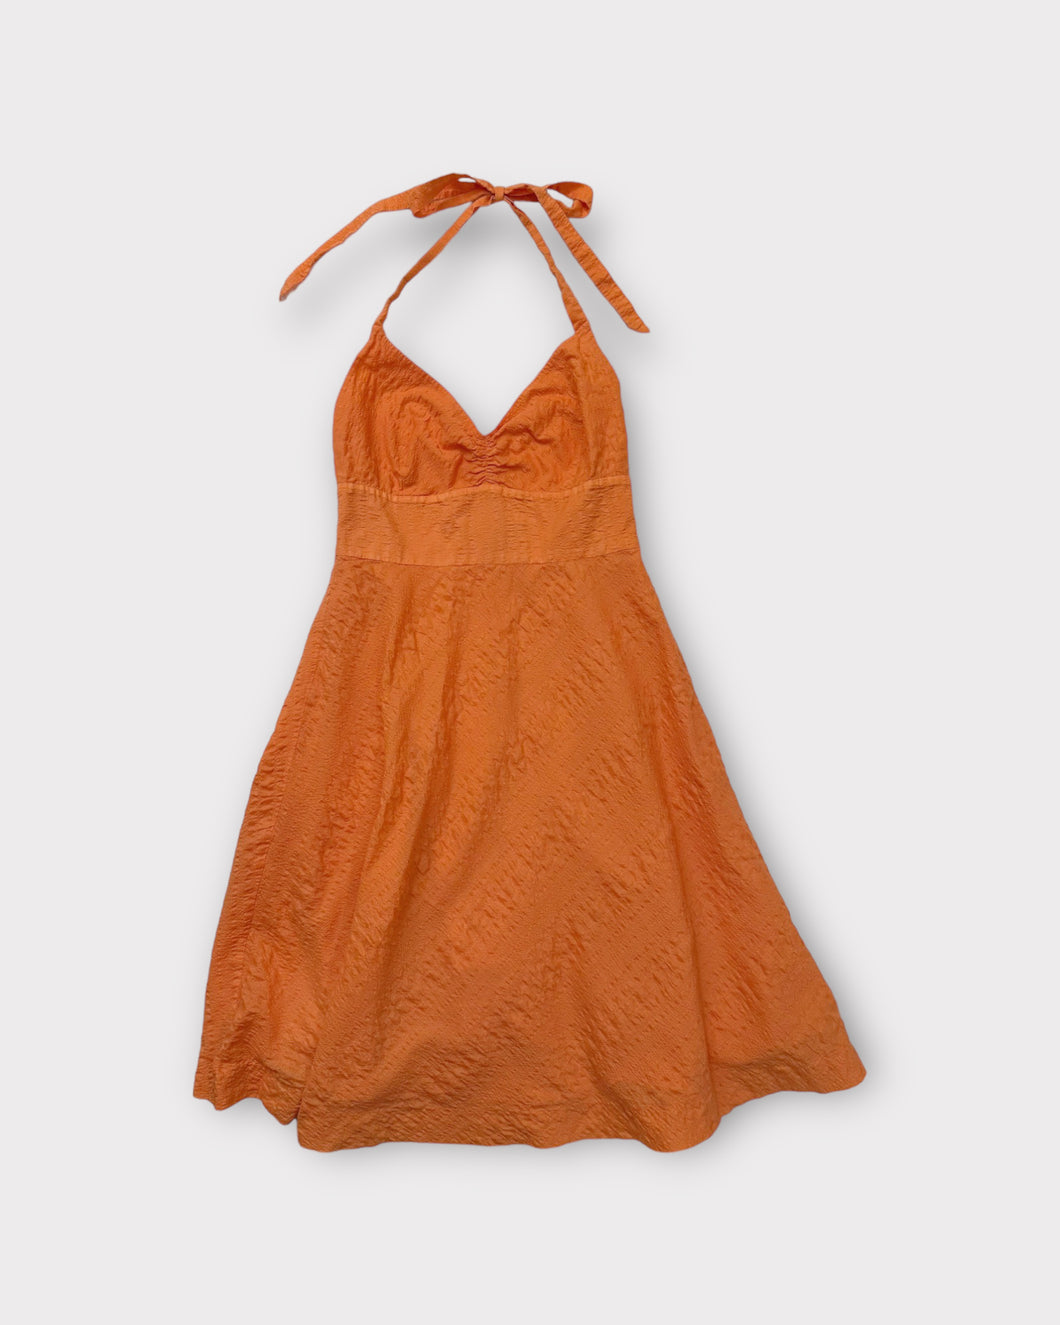 J Crew Orange Textured Halter Dress (6)